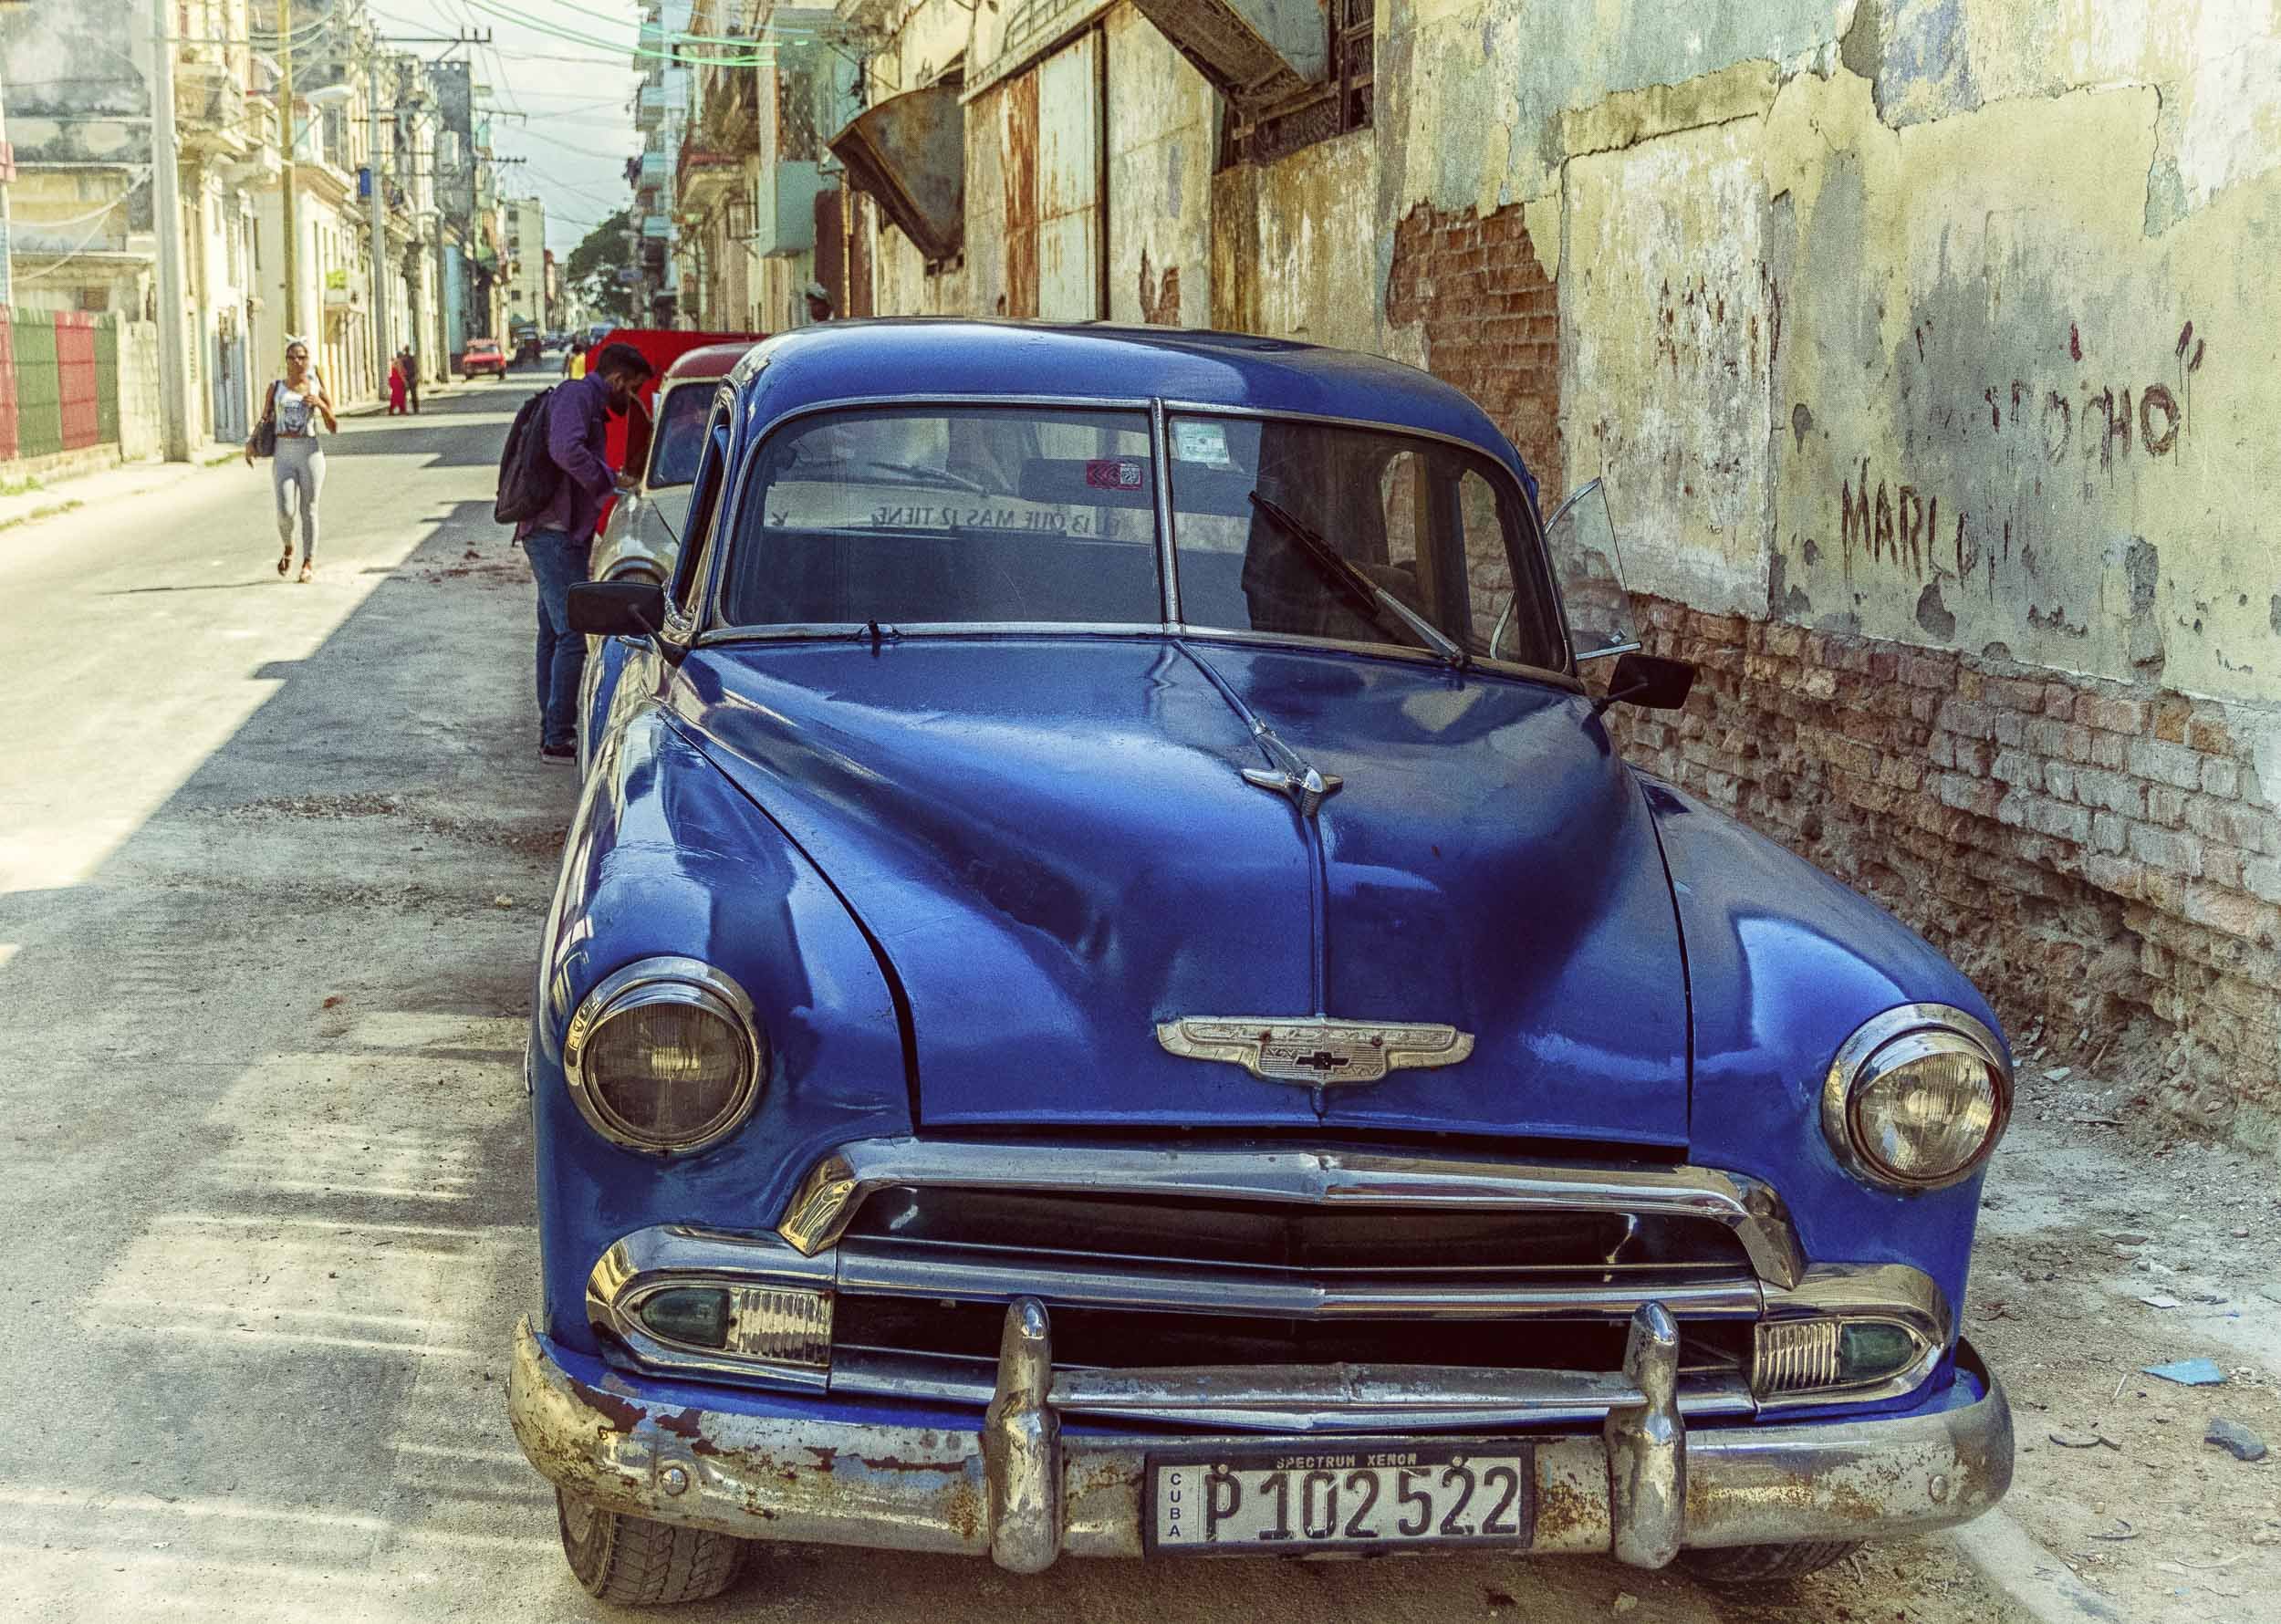 Blue Chevy, Havana